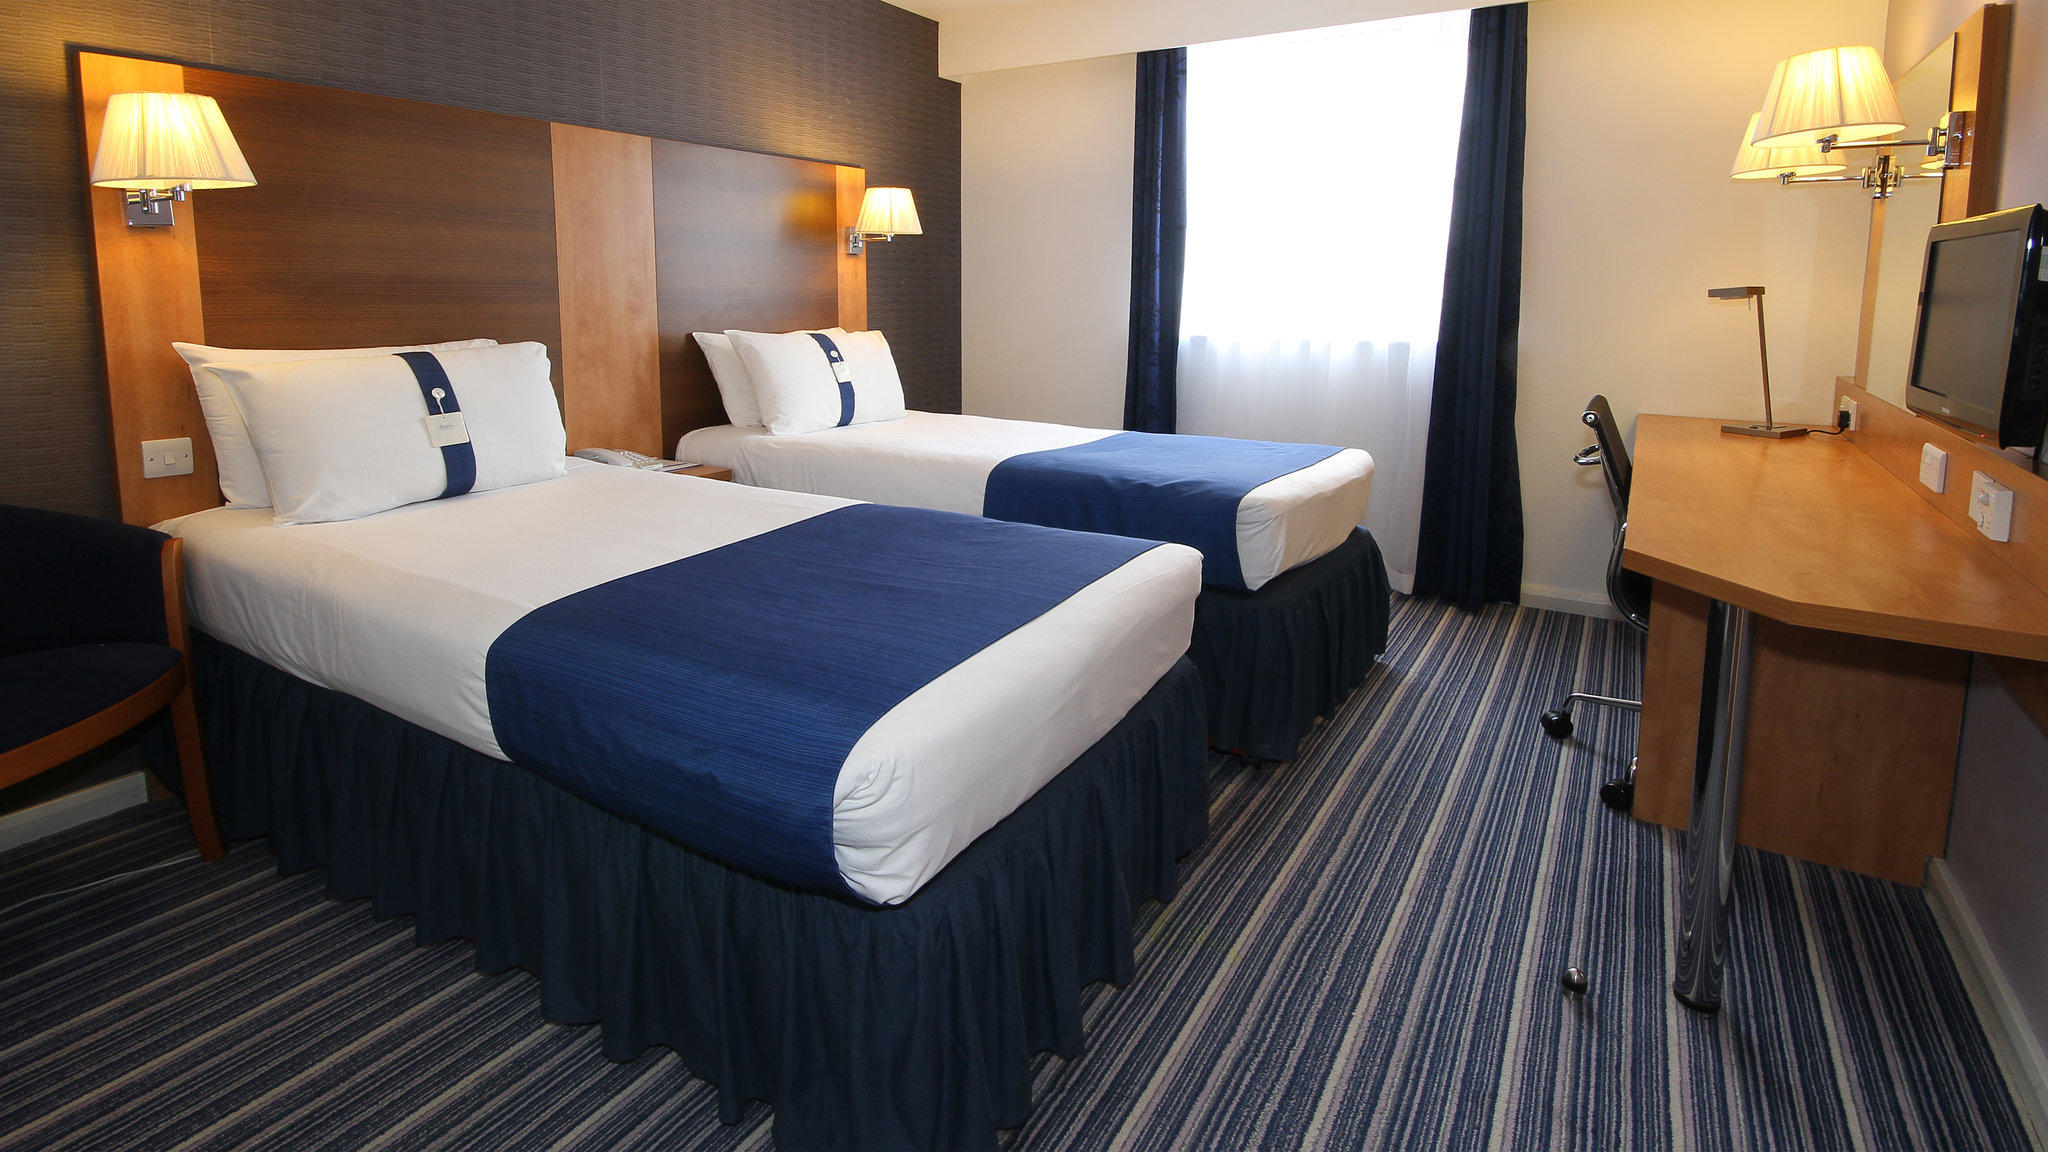 Holiday Inn Express Nuneaton, an IHG Hotel Nuneaton 02476 357370